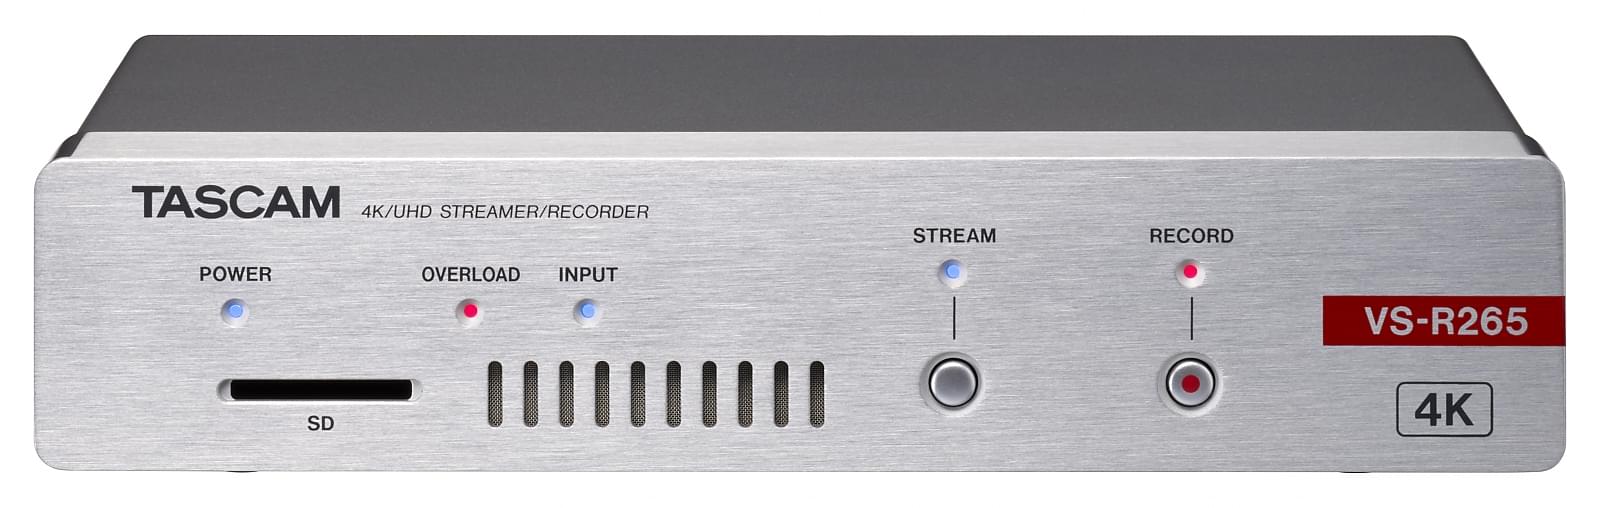 Hardware-Encoder/Decoder für Live-Streaming in 4K/UHD | Tascam VS-R265